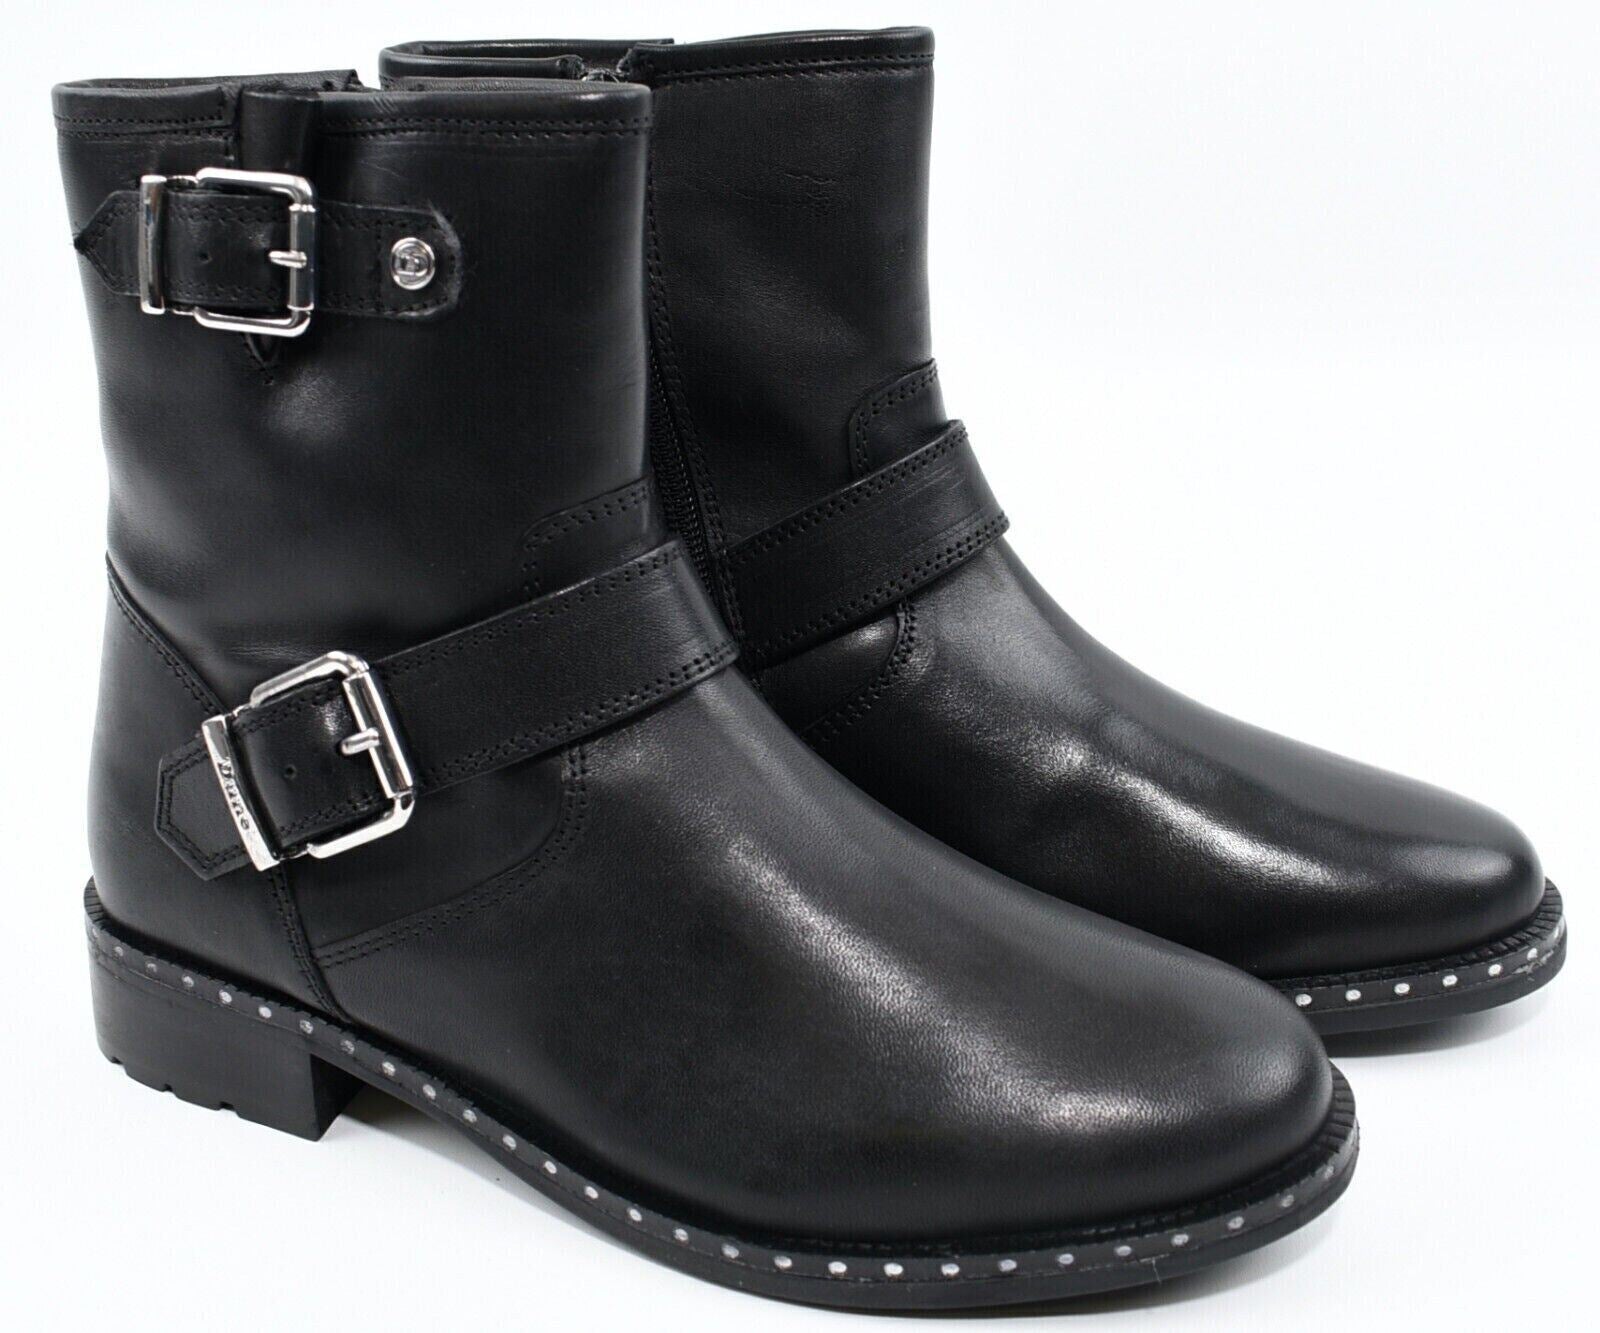 DUNE Women's RIKER 2 Boots, Genuine Leather, Black, size UK 4 /EU 37